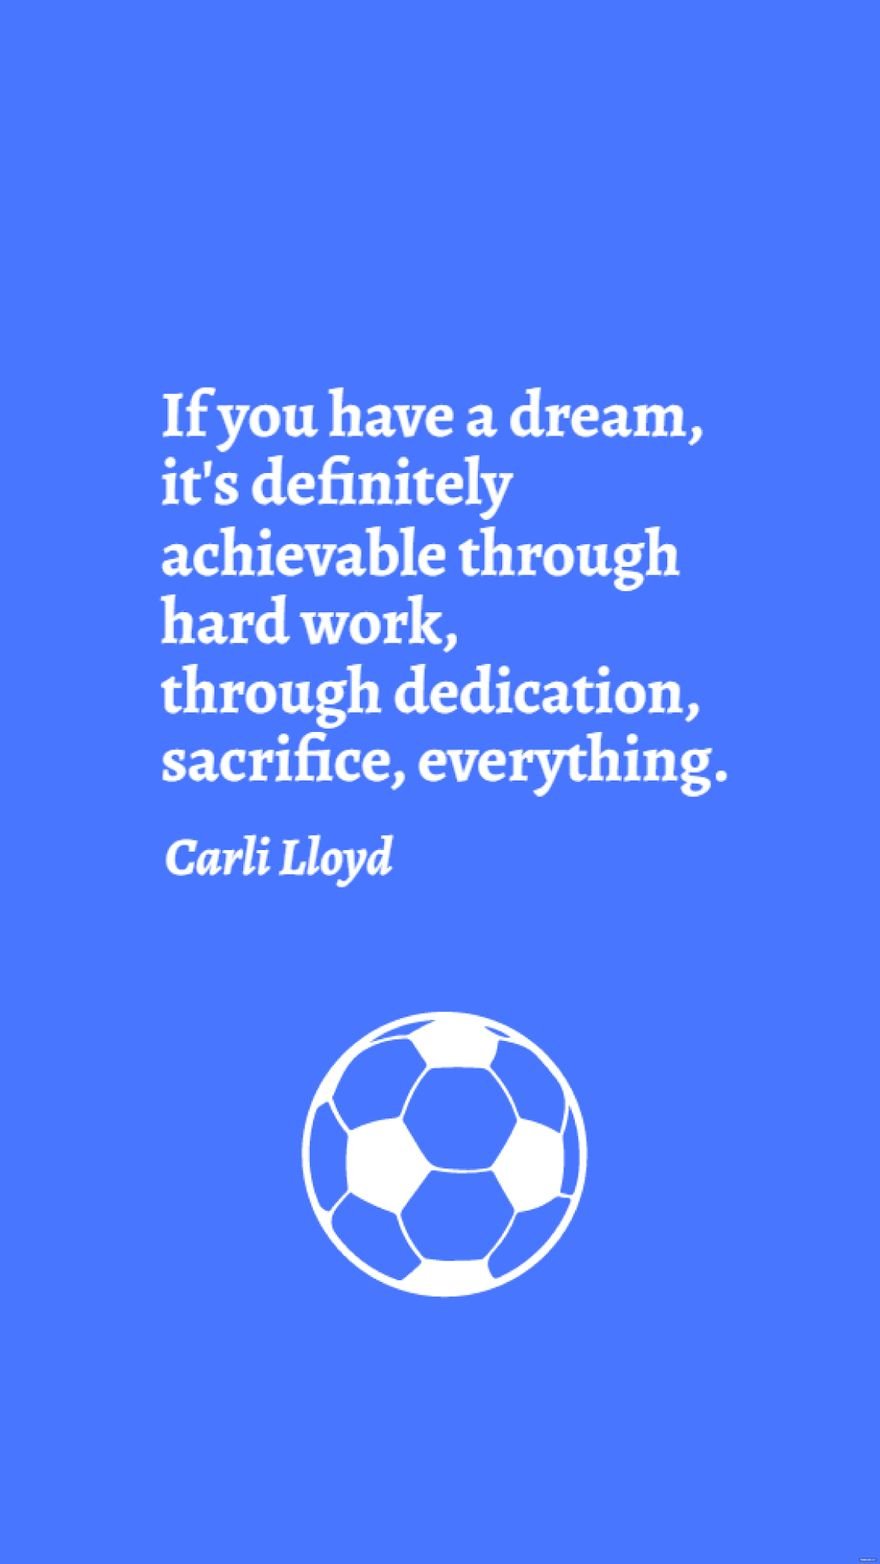 Carli Lloyd - If you have a dream, it's definitely achievable through hard work, through dedication, sacrifice, everything.